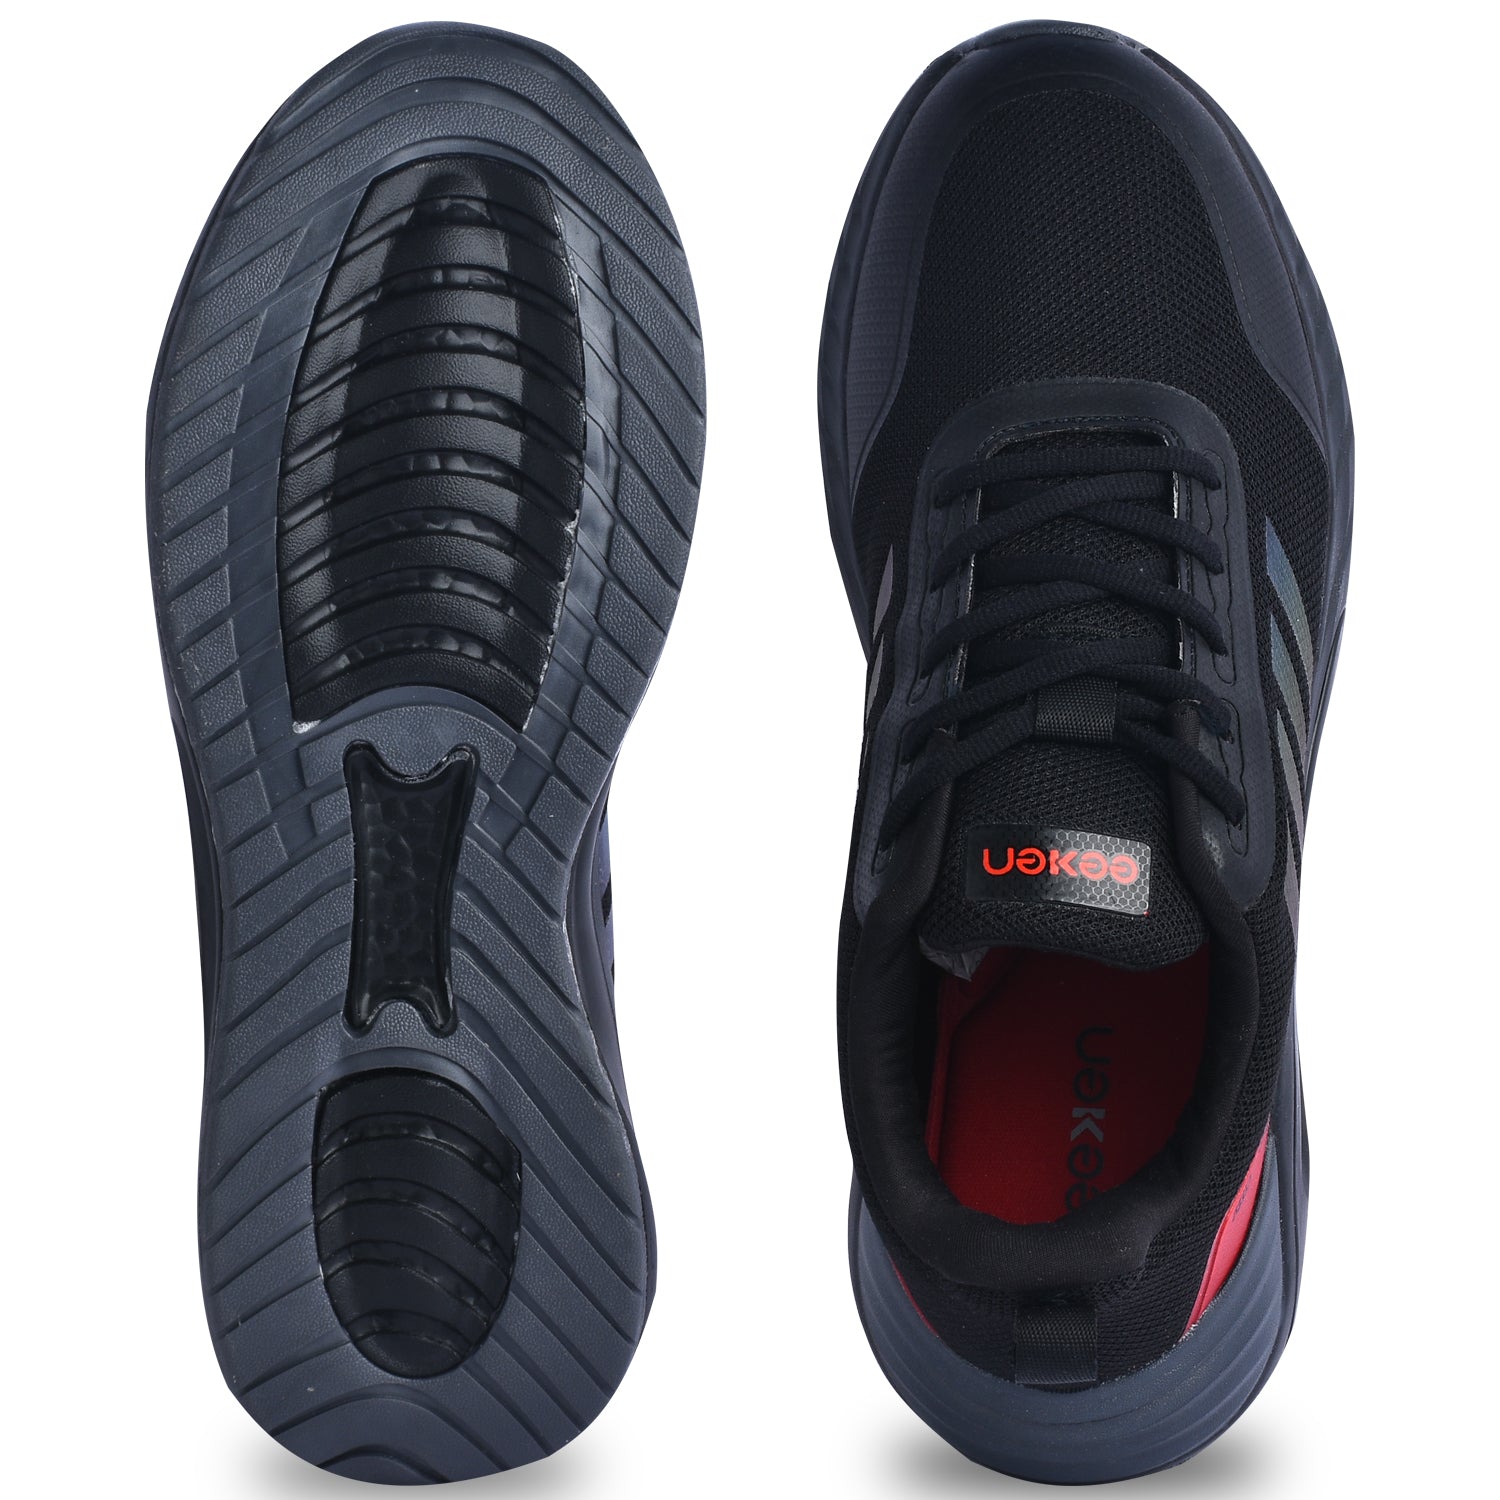 Eeken Black Athleisure Shoes for Men